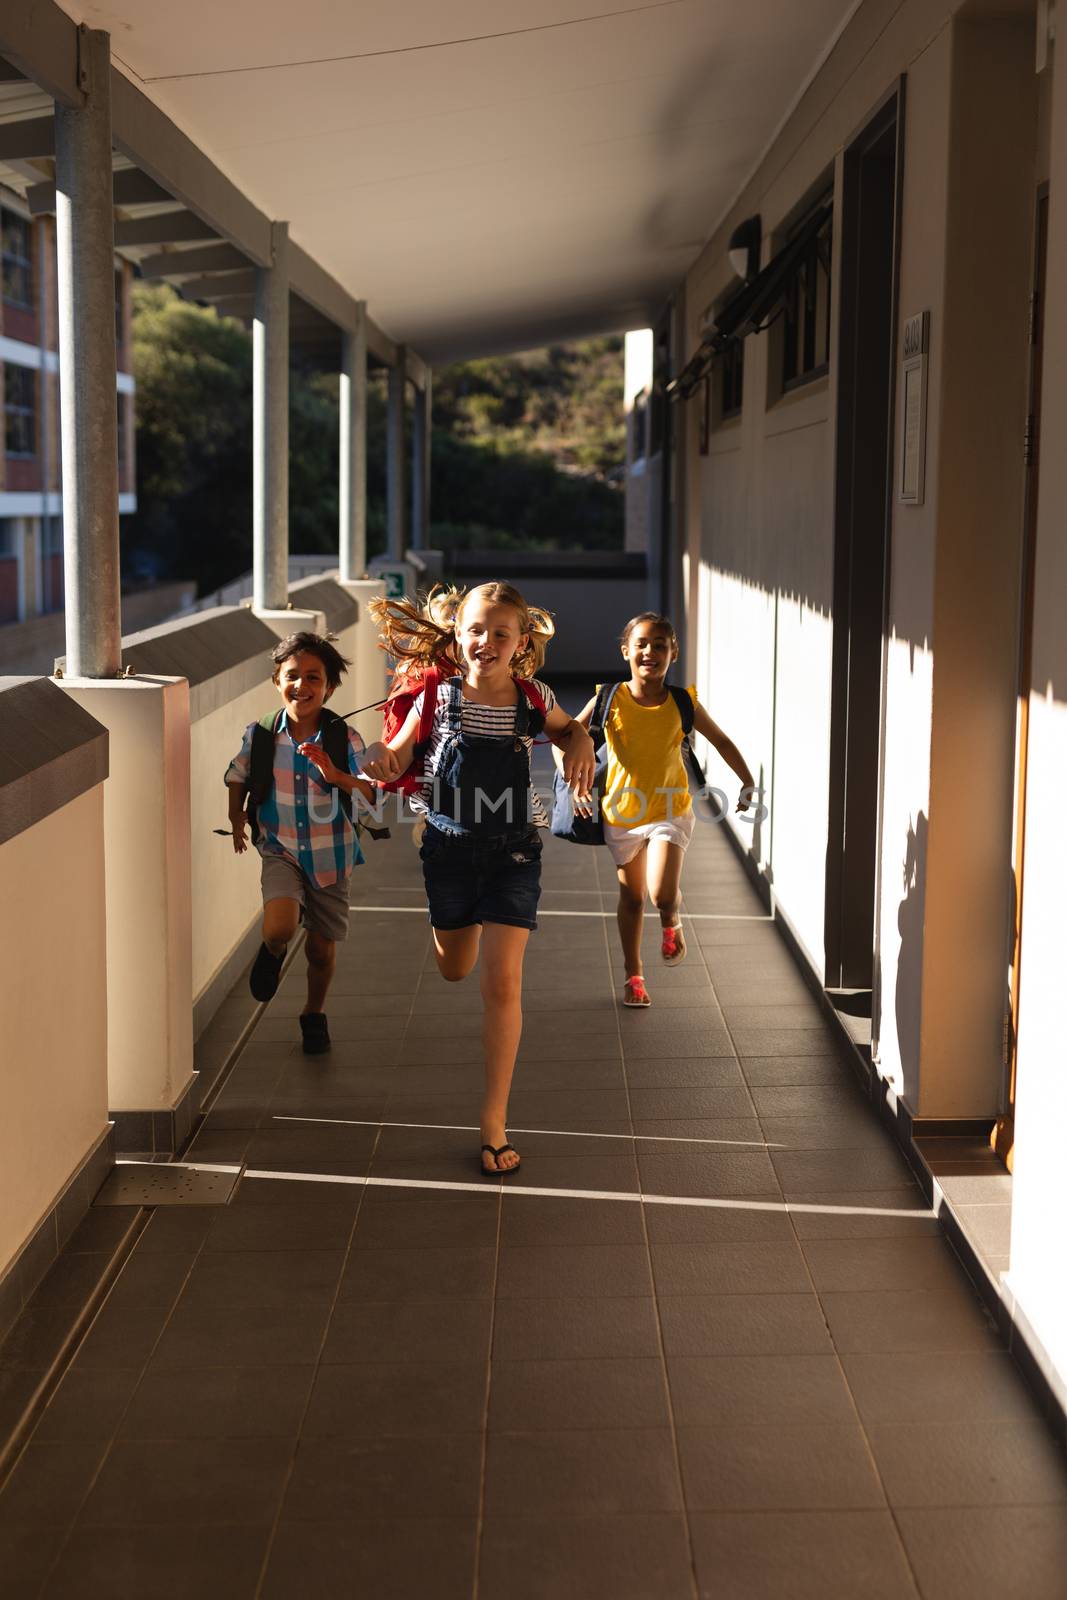 Schoolkids with schoolbags running in hallway by Wavebreakmedia